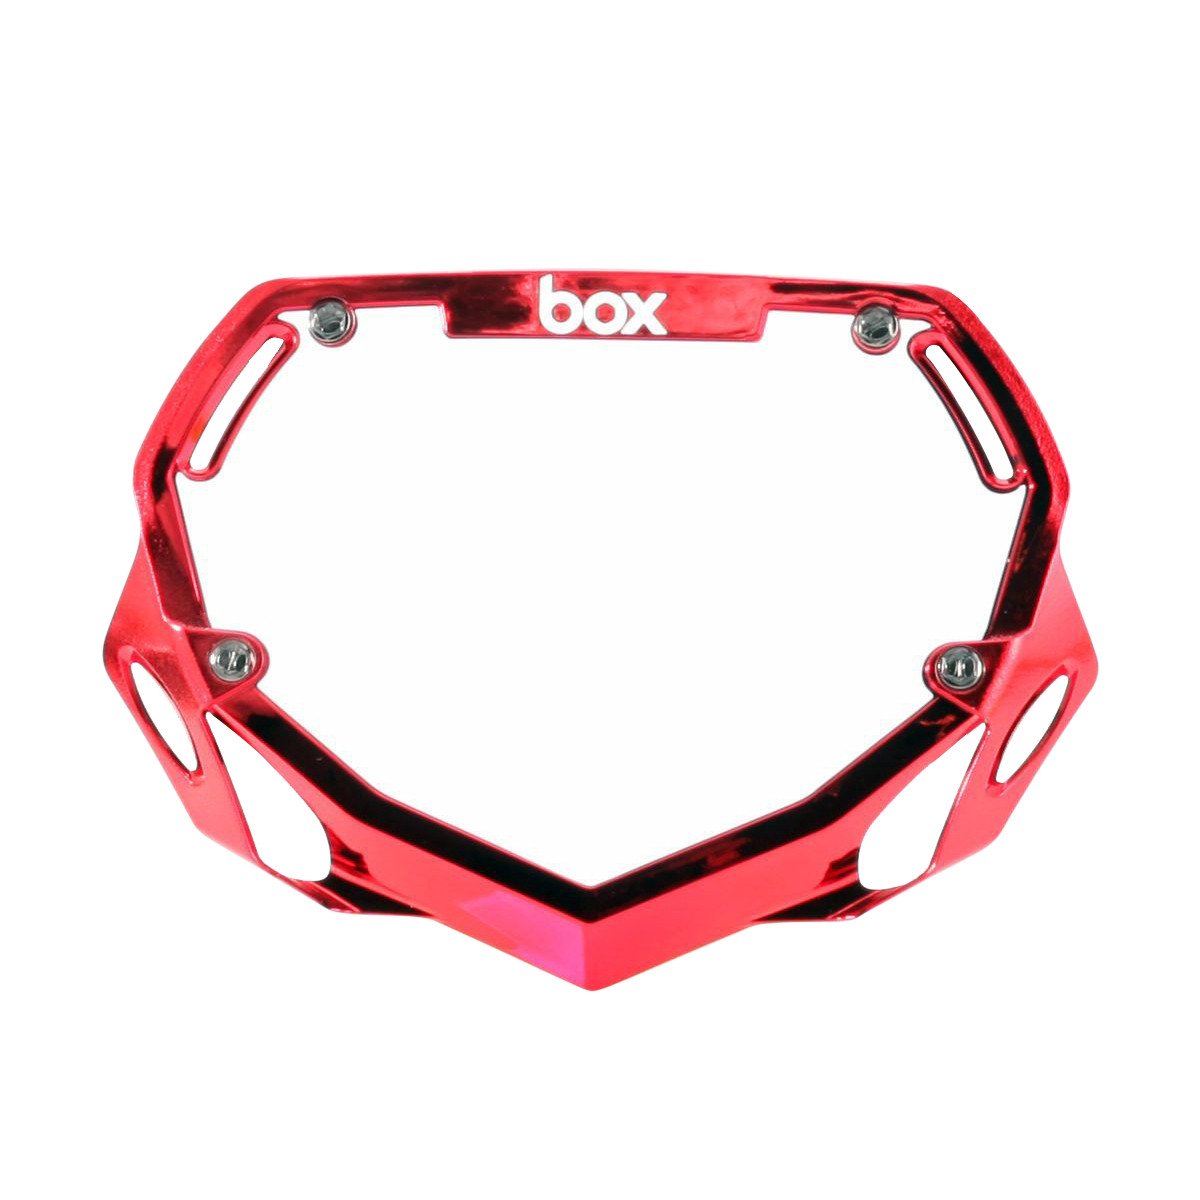 Box Two Mini / Cruiser BMX Number Plate - Red Chrome + White